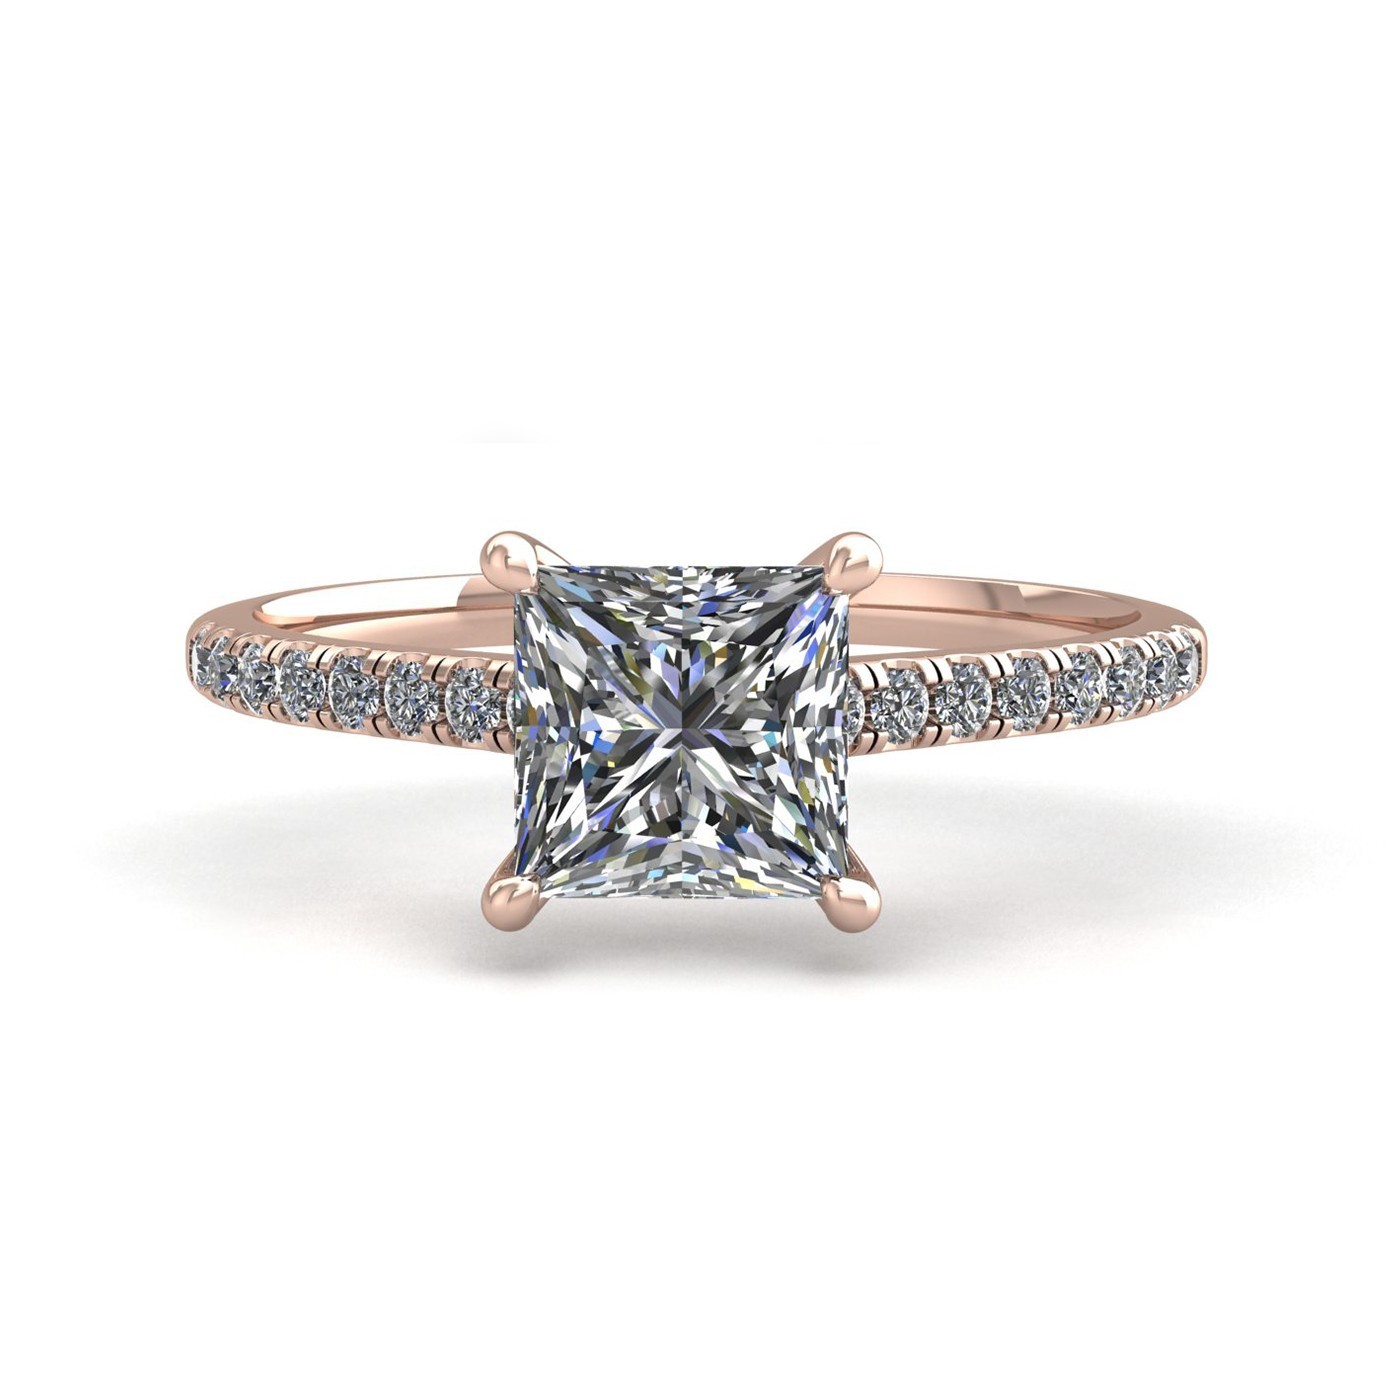 18k rose gold  1,00 ct 4 prongs princess cut diamond engagement ring with whisper thin pavÉ set band